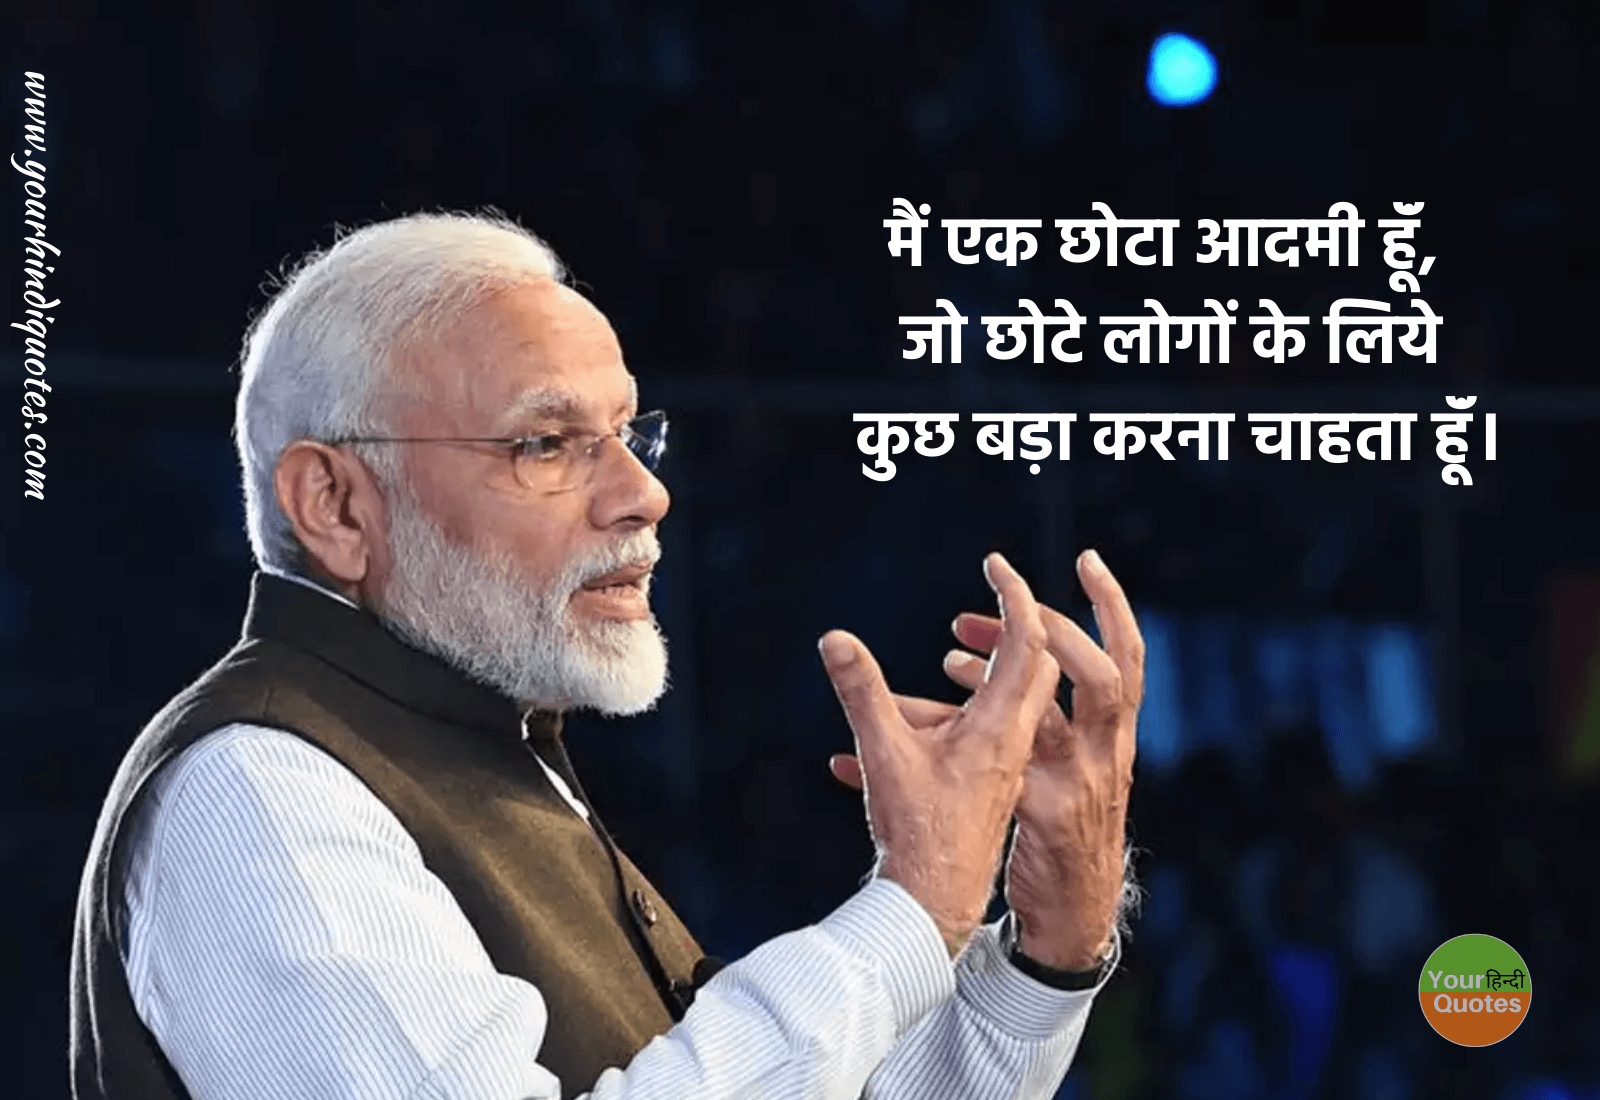 Narendra Modi Quotes in Hindi 